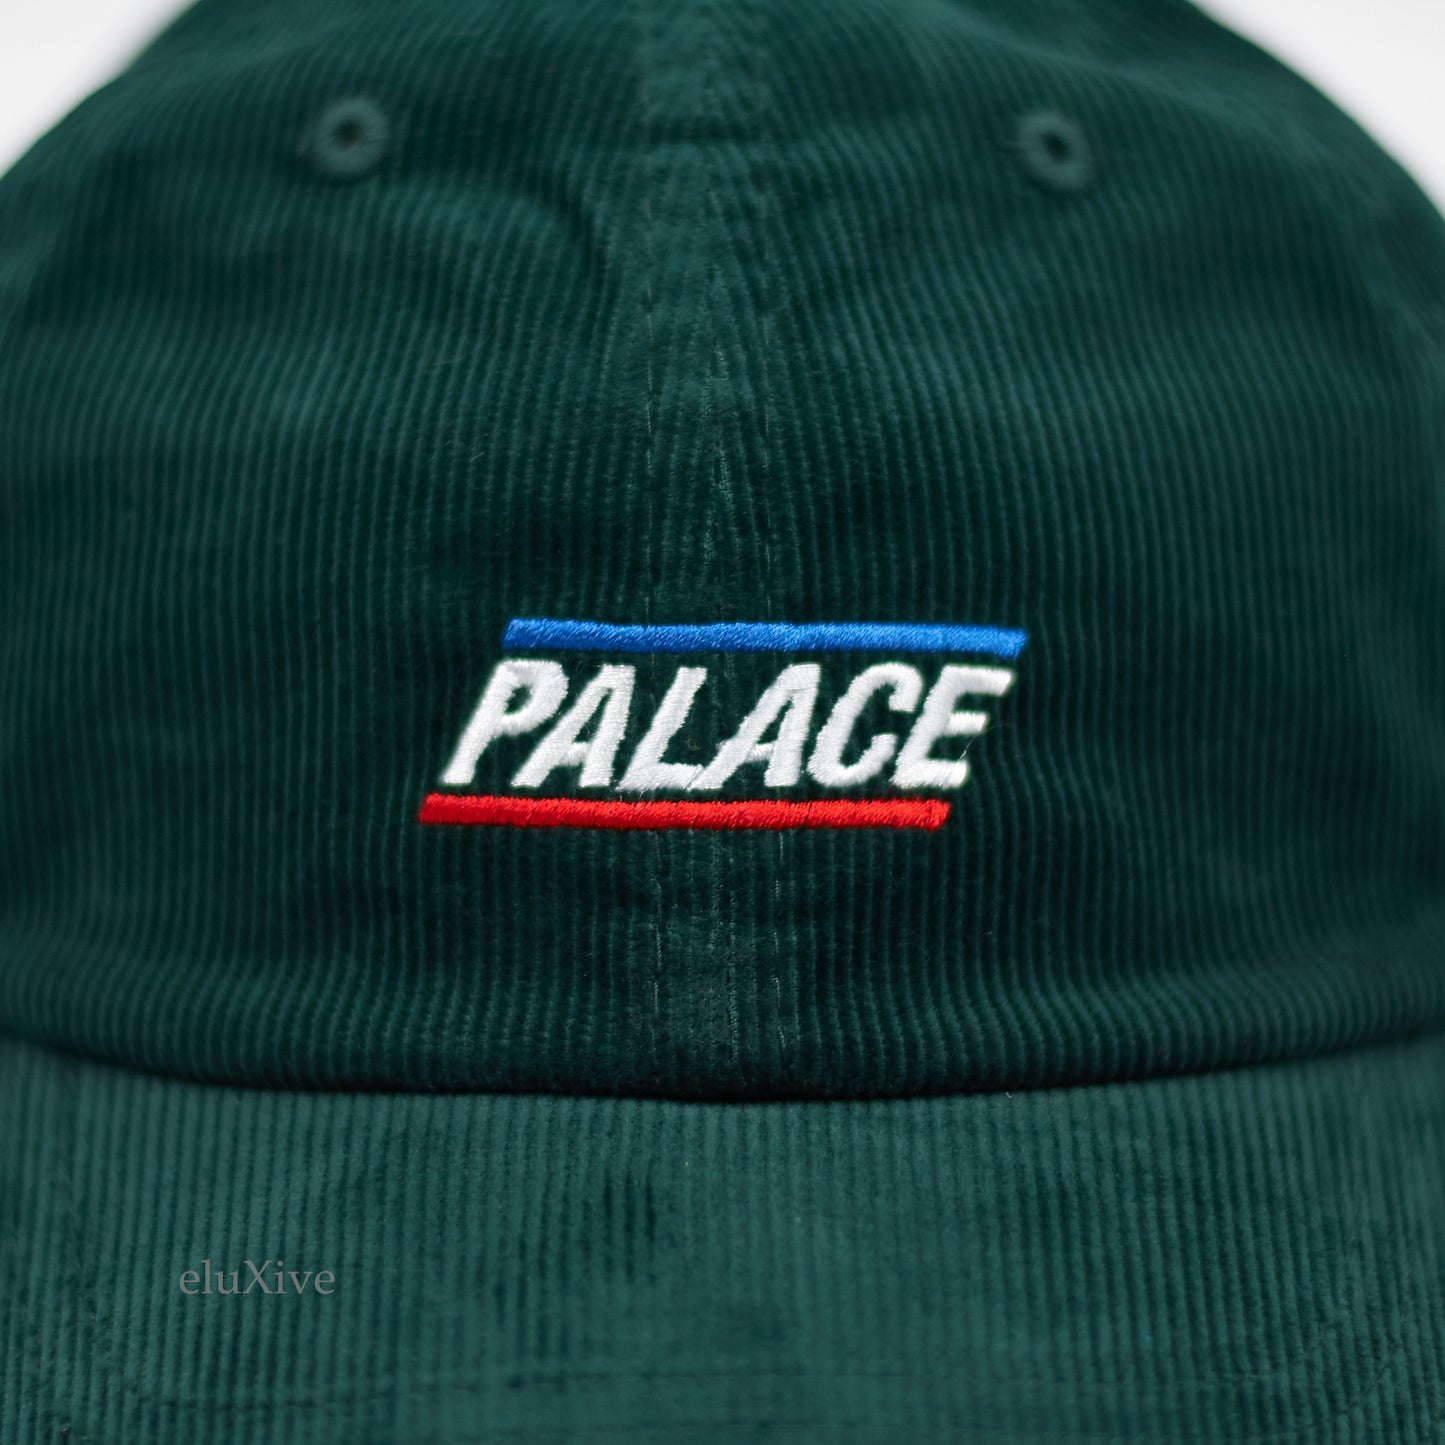 Palace - Basically A Corduroy Hat (Dark Green)